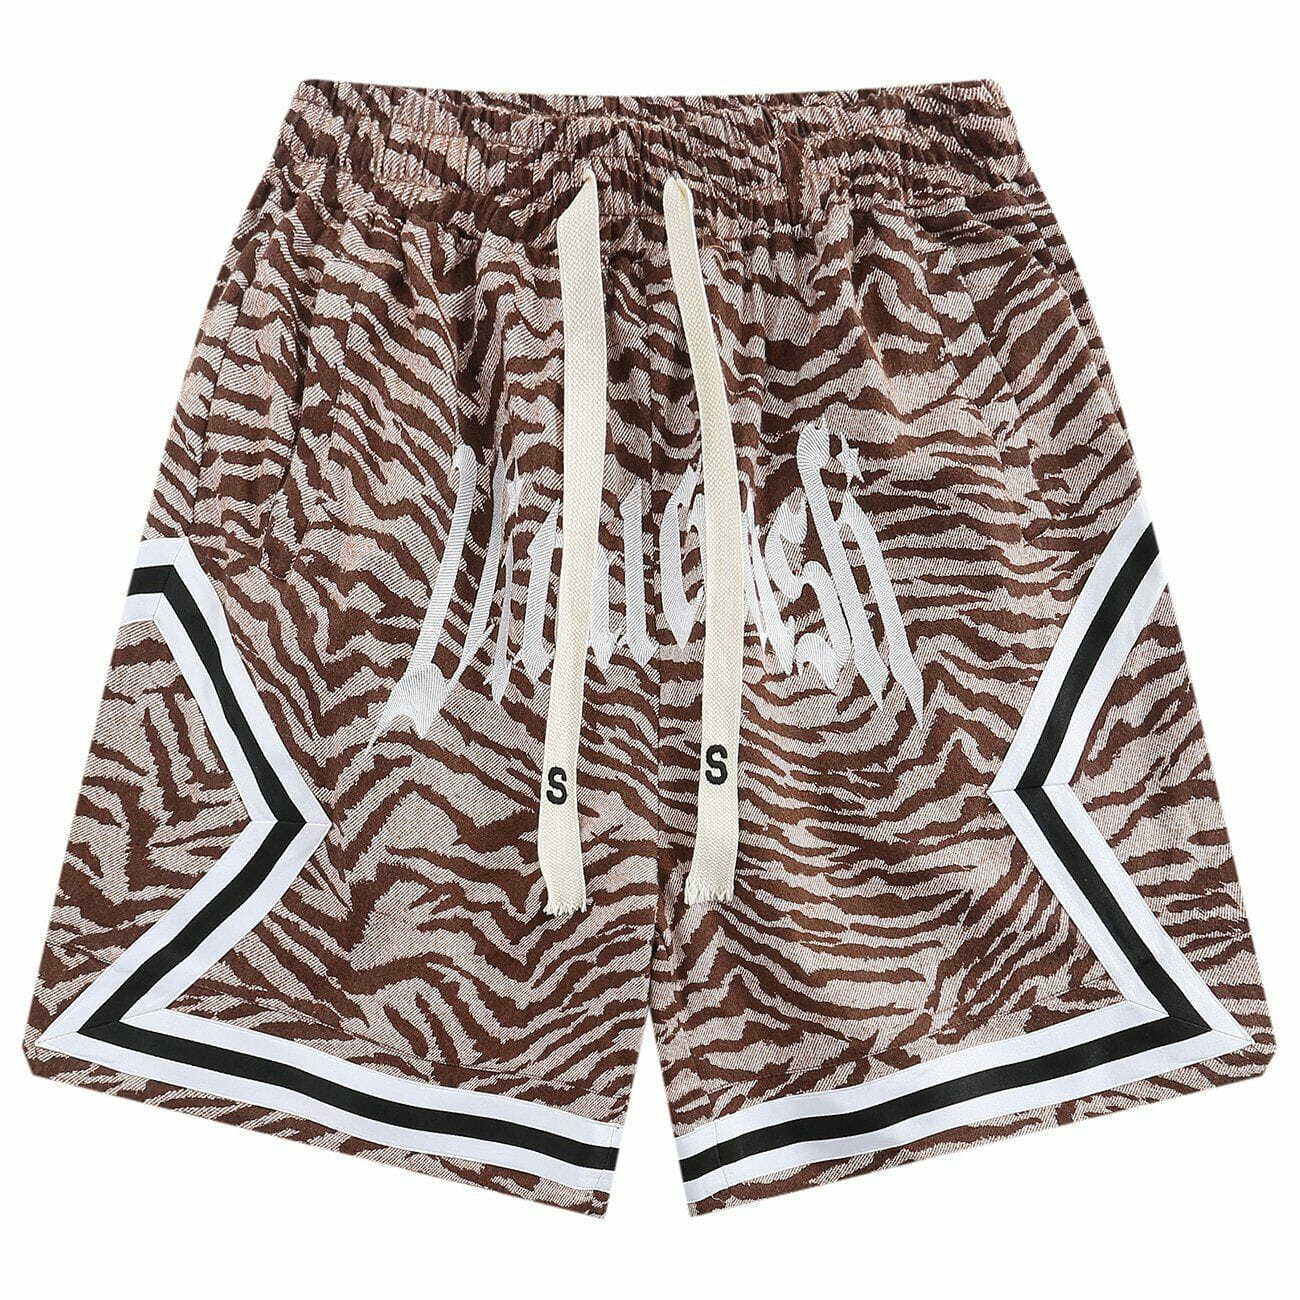 zebra alphabet embroidered shorts edgy & vibrant streetwear 2473